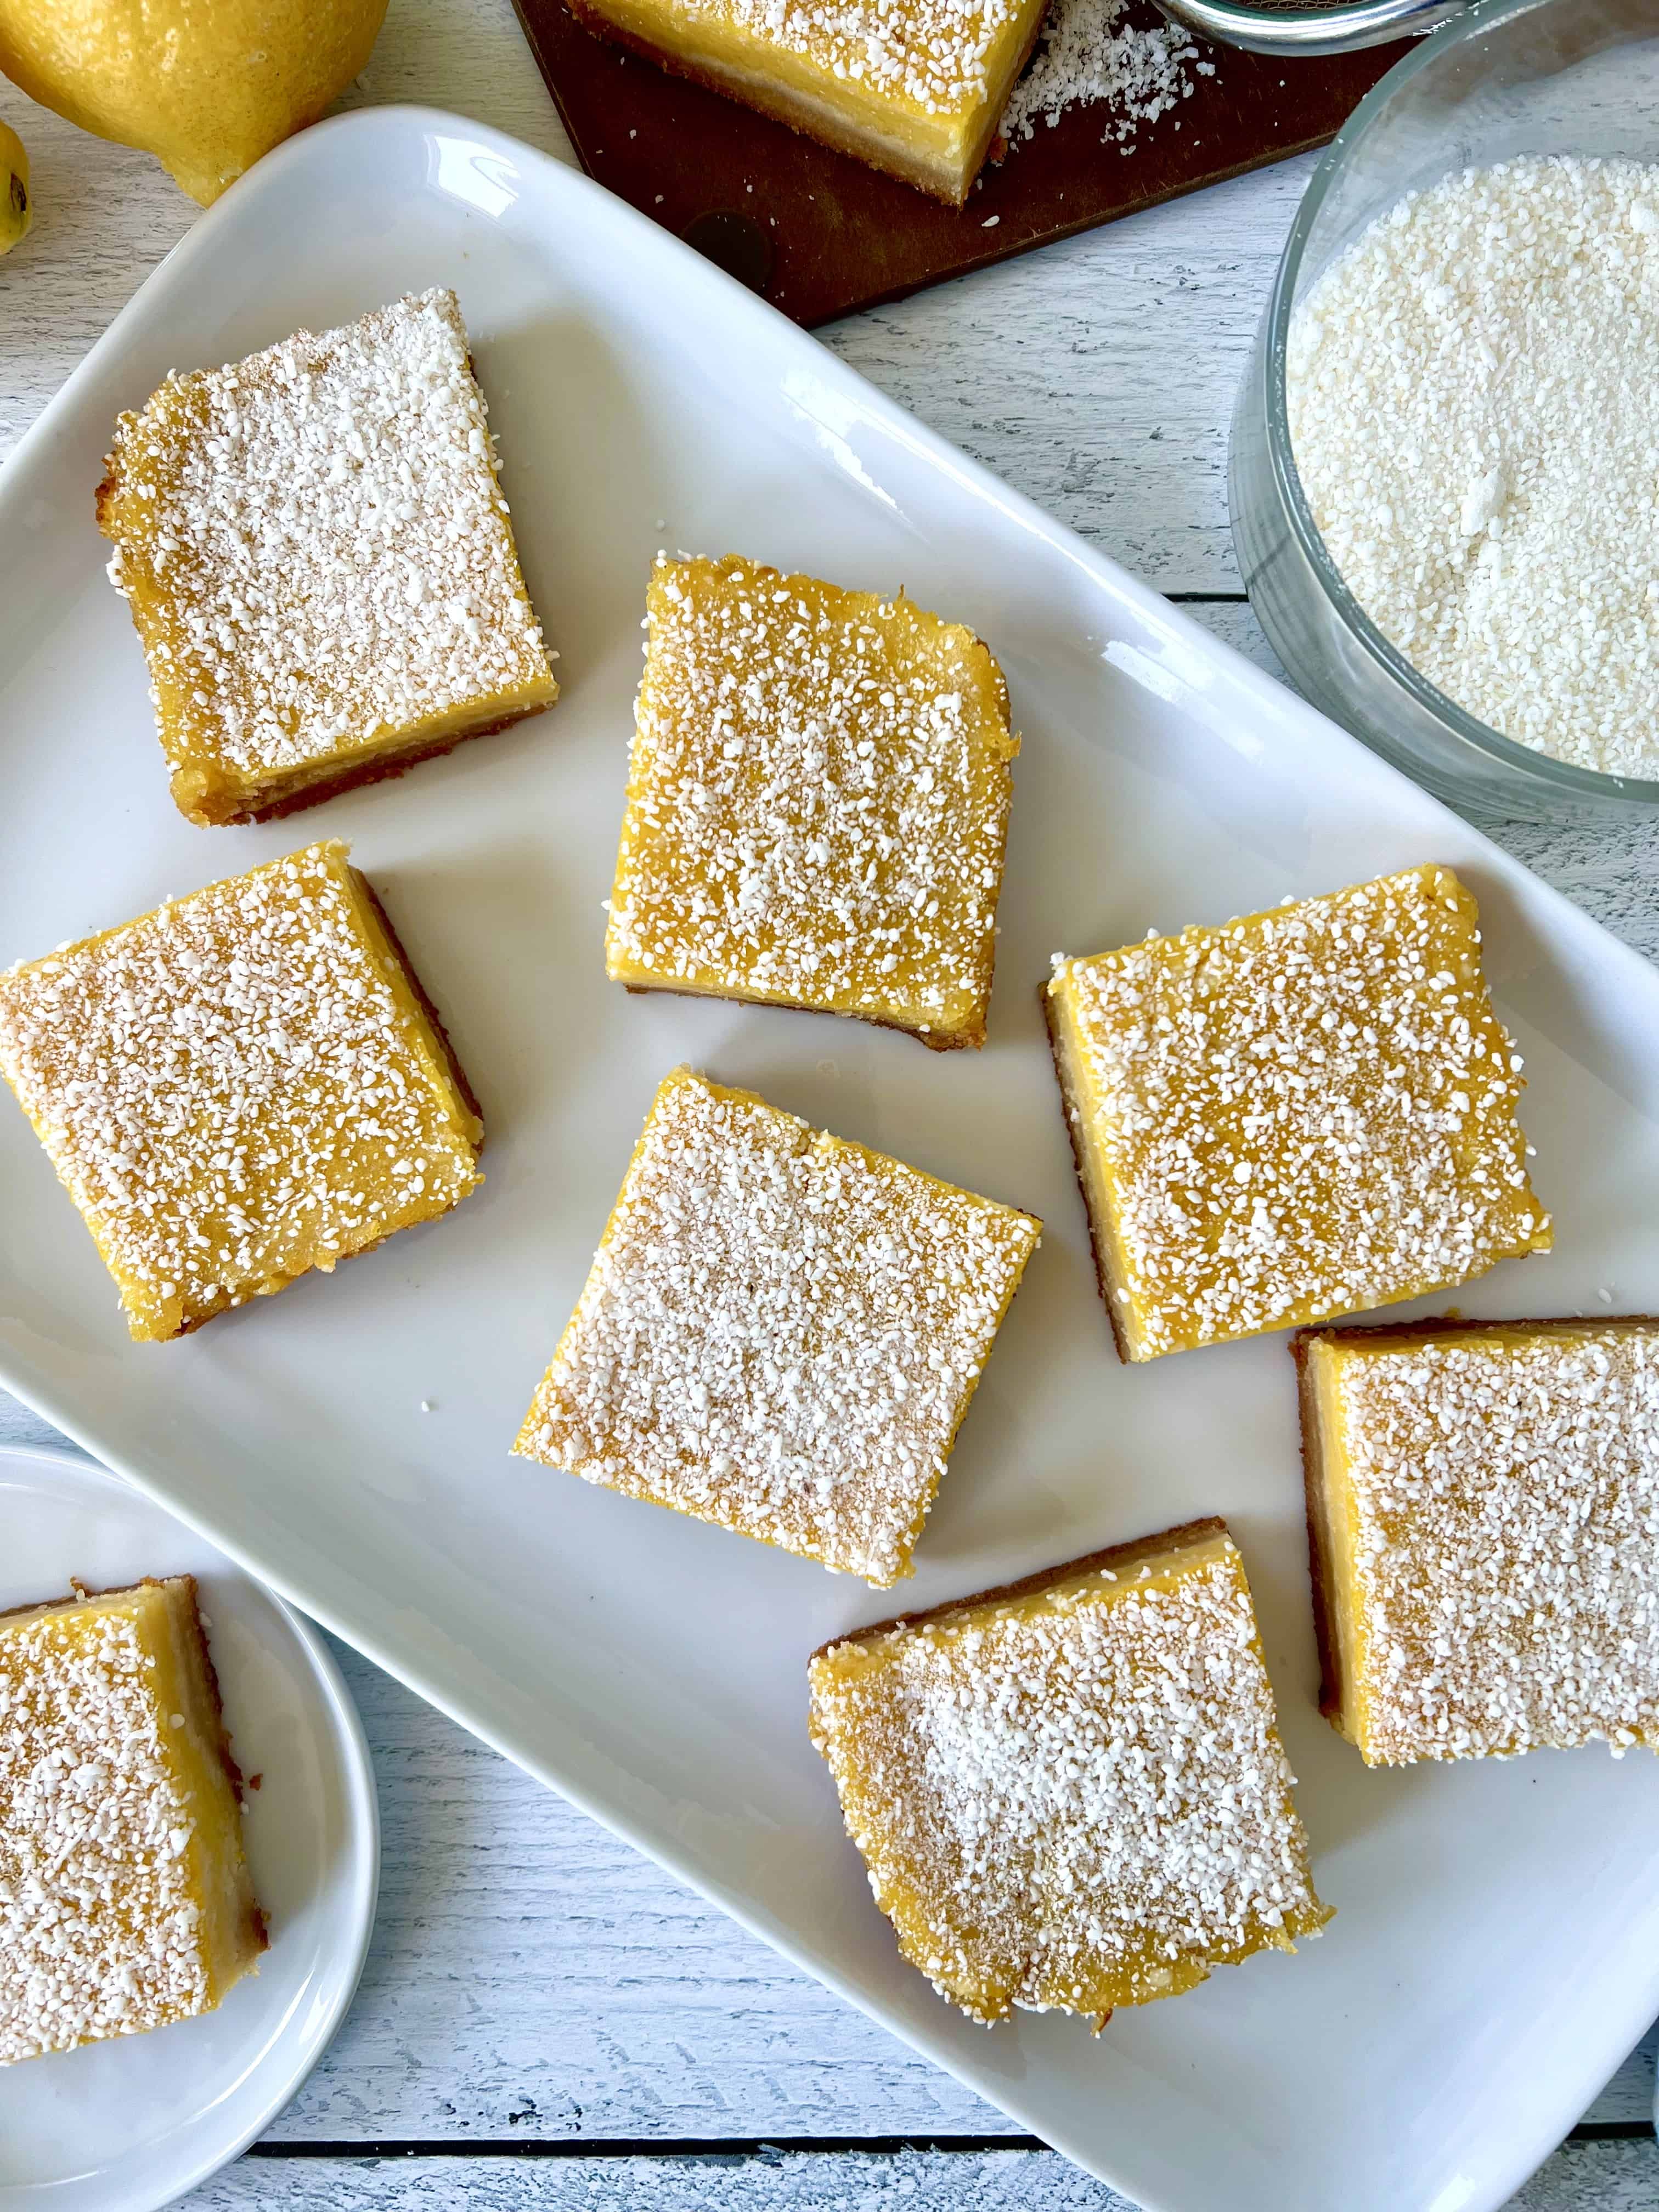 Gluten-free dairy-free lemon bars on a white rectangular platter and small white plate.